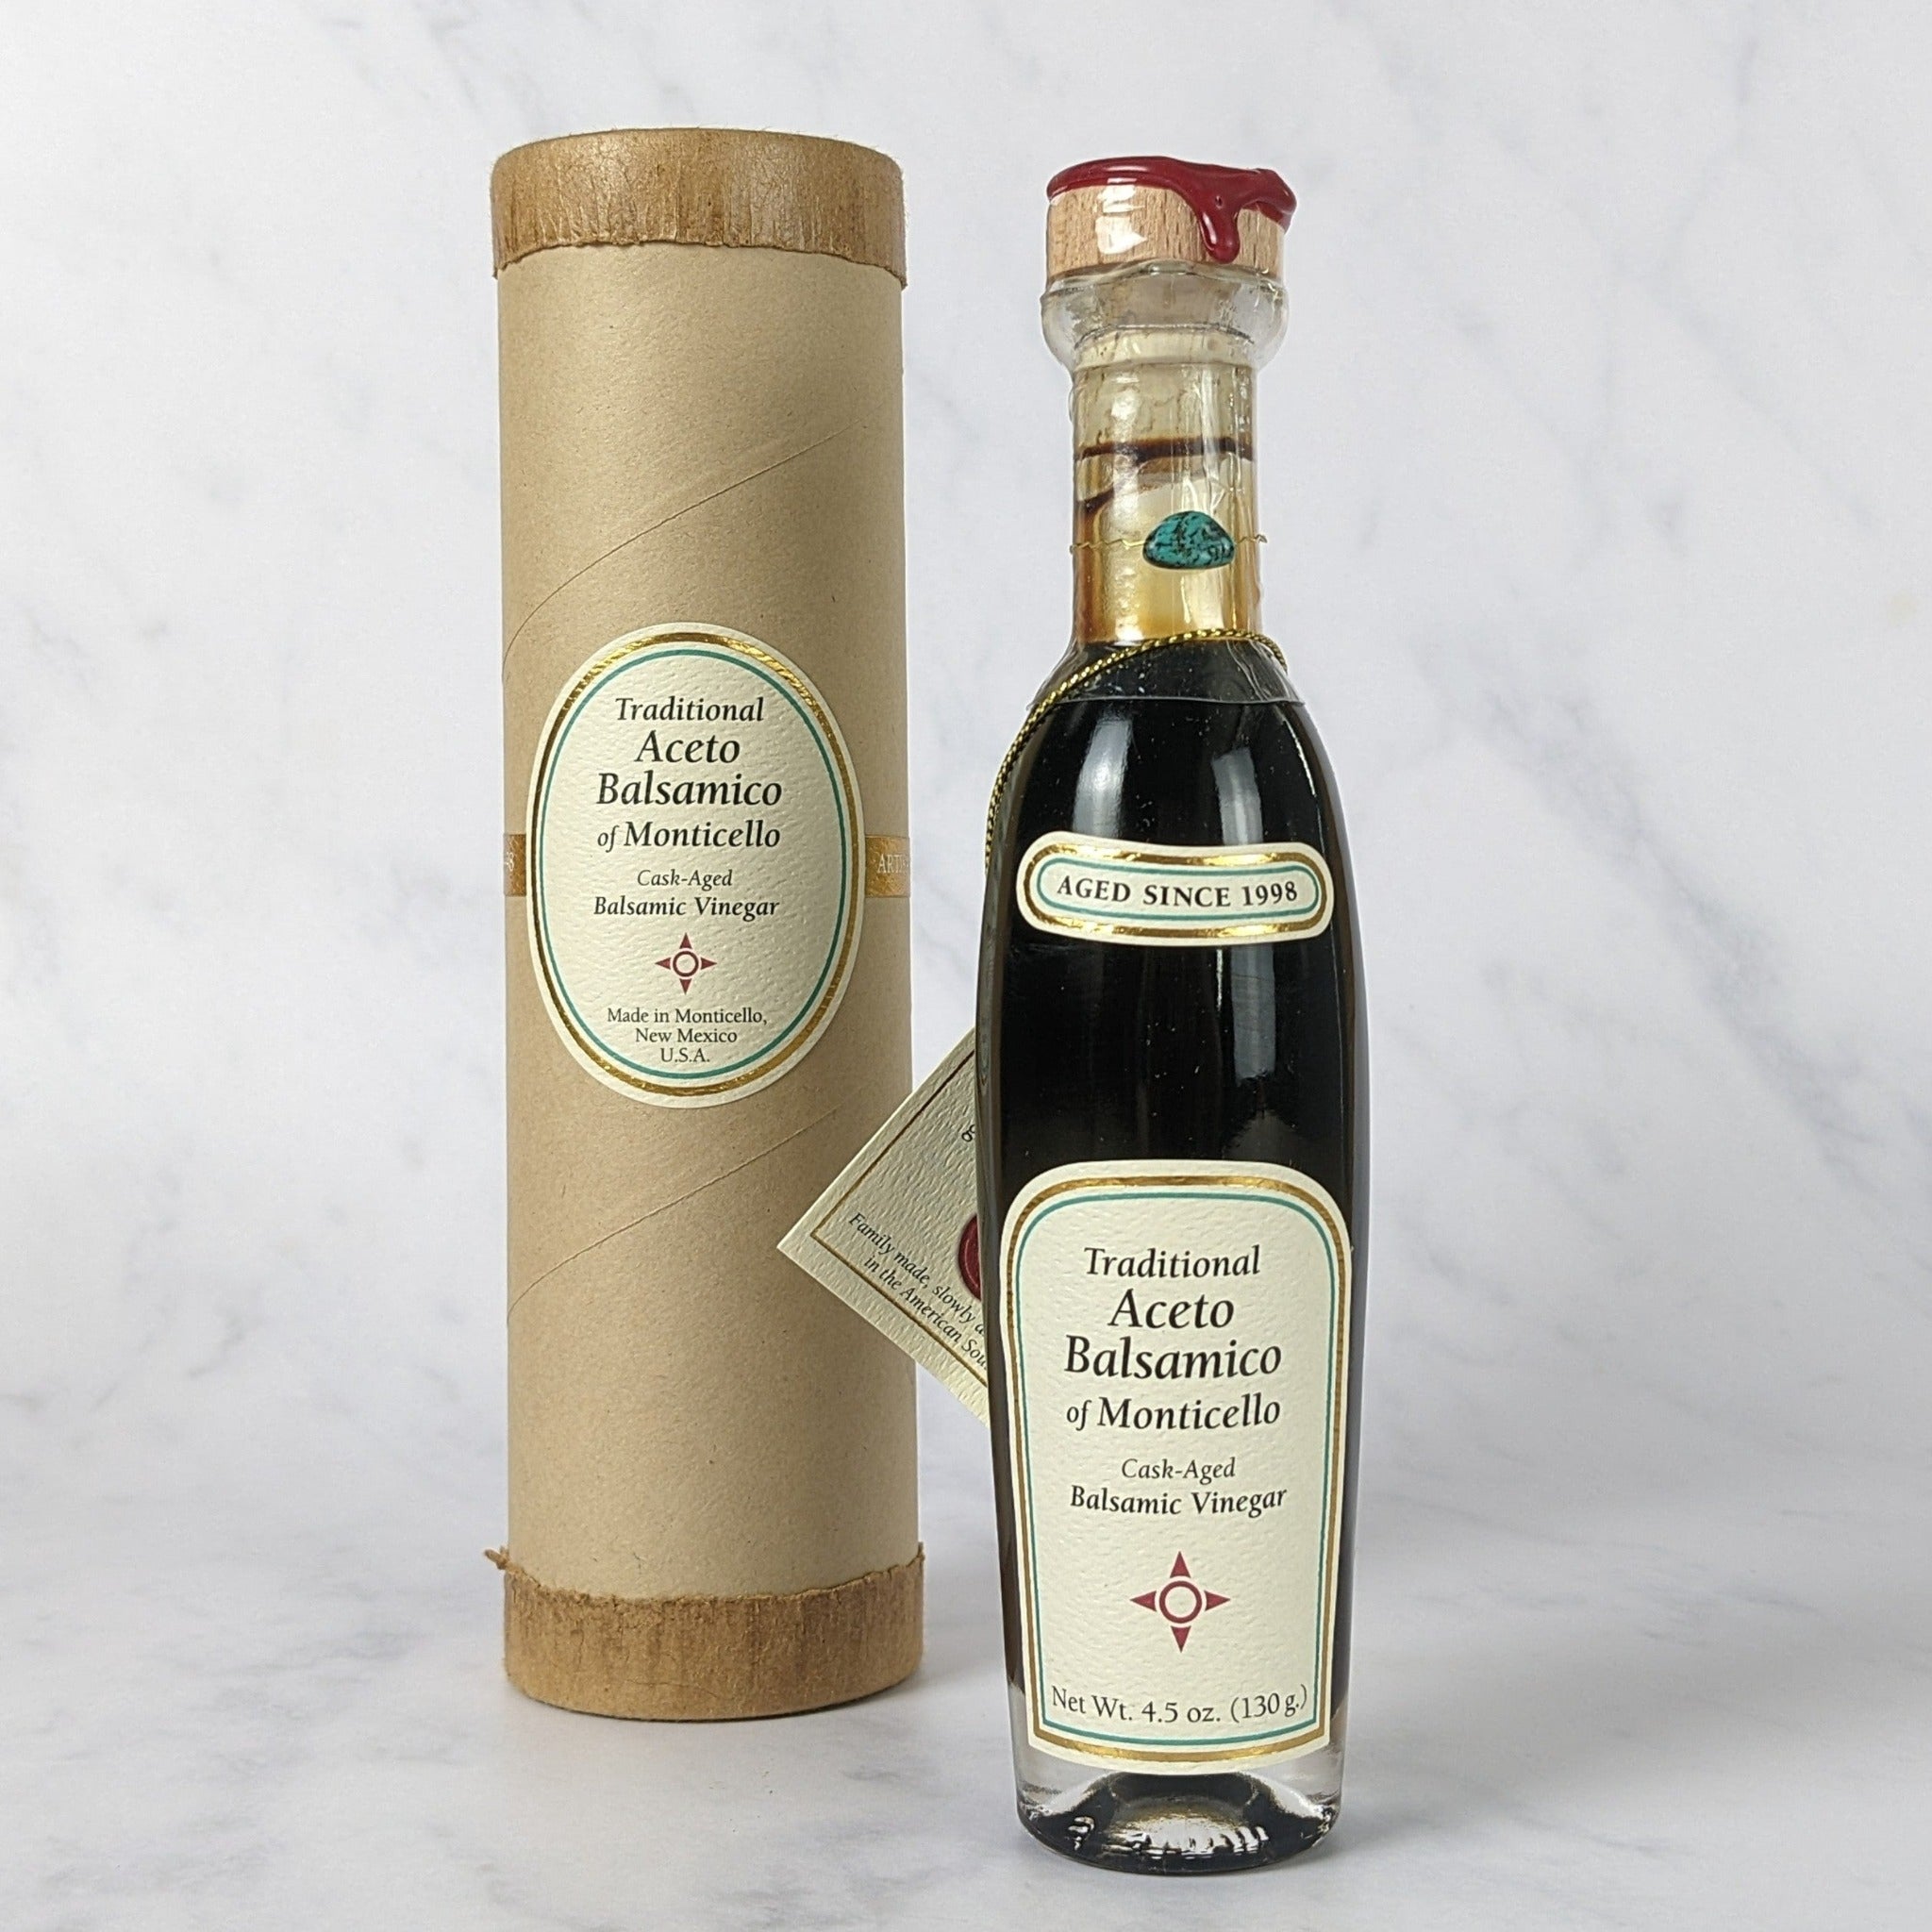 Organic Traditional Balsamic Vinegar